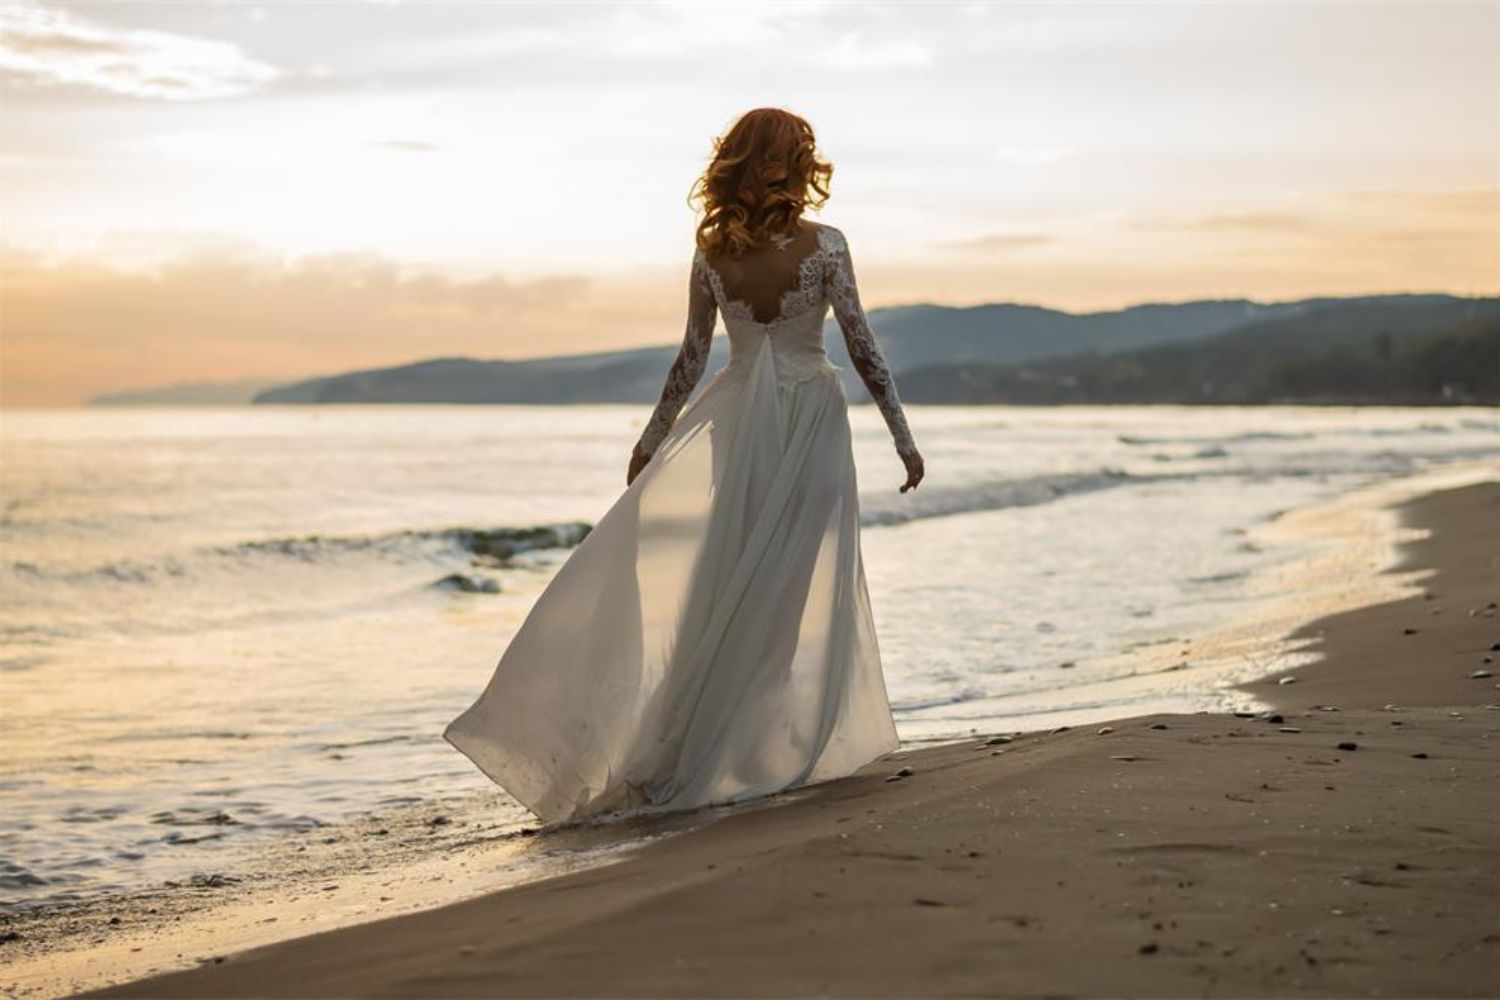 bride walking on beach photo by Martynova Marina on shutterstock